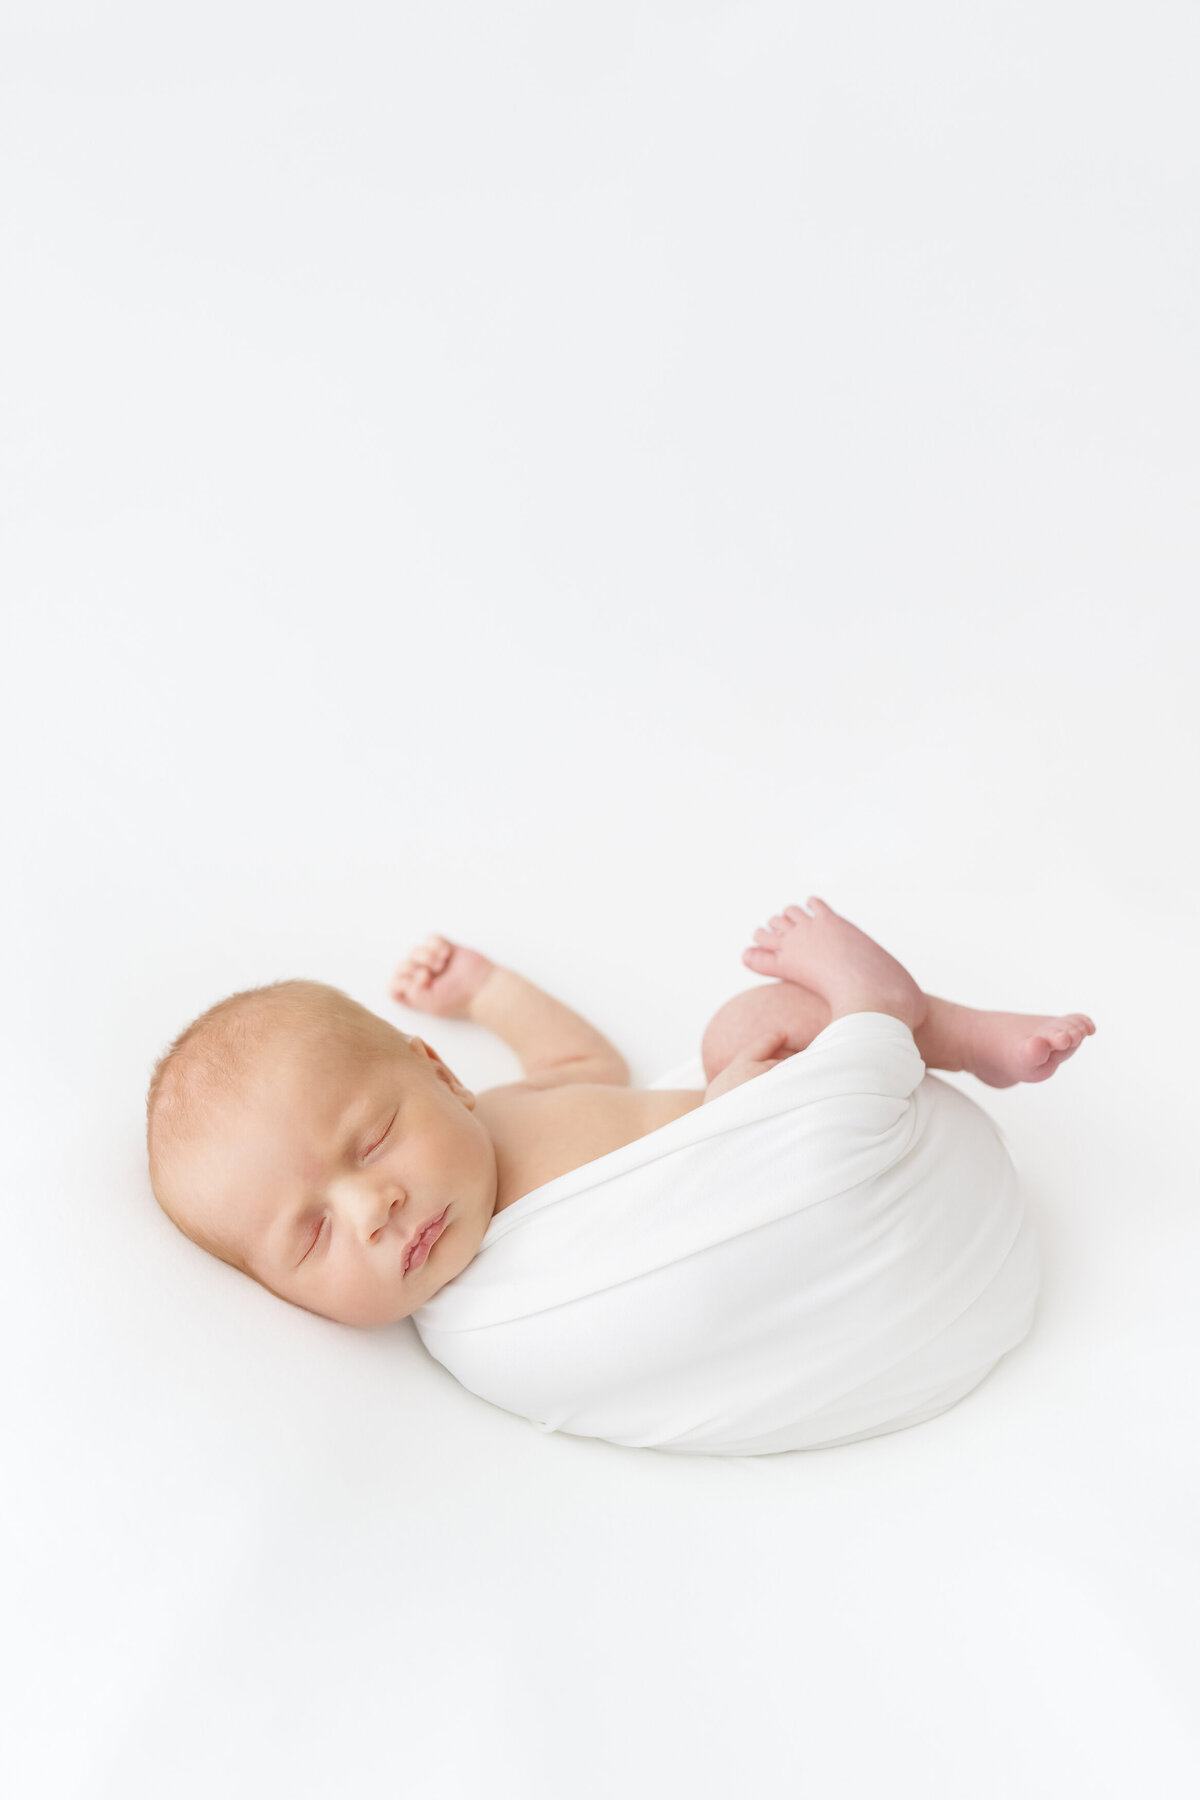 Chandler newborn photographer | Reaj Roberts Photography00035